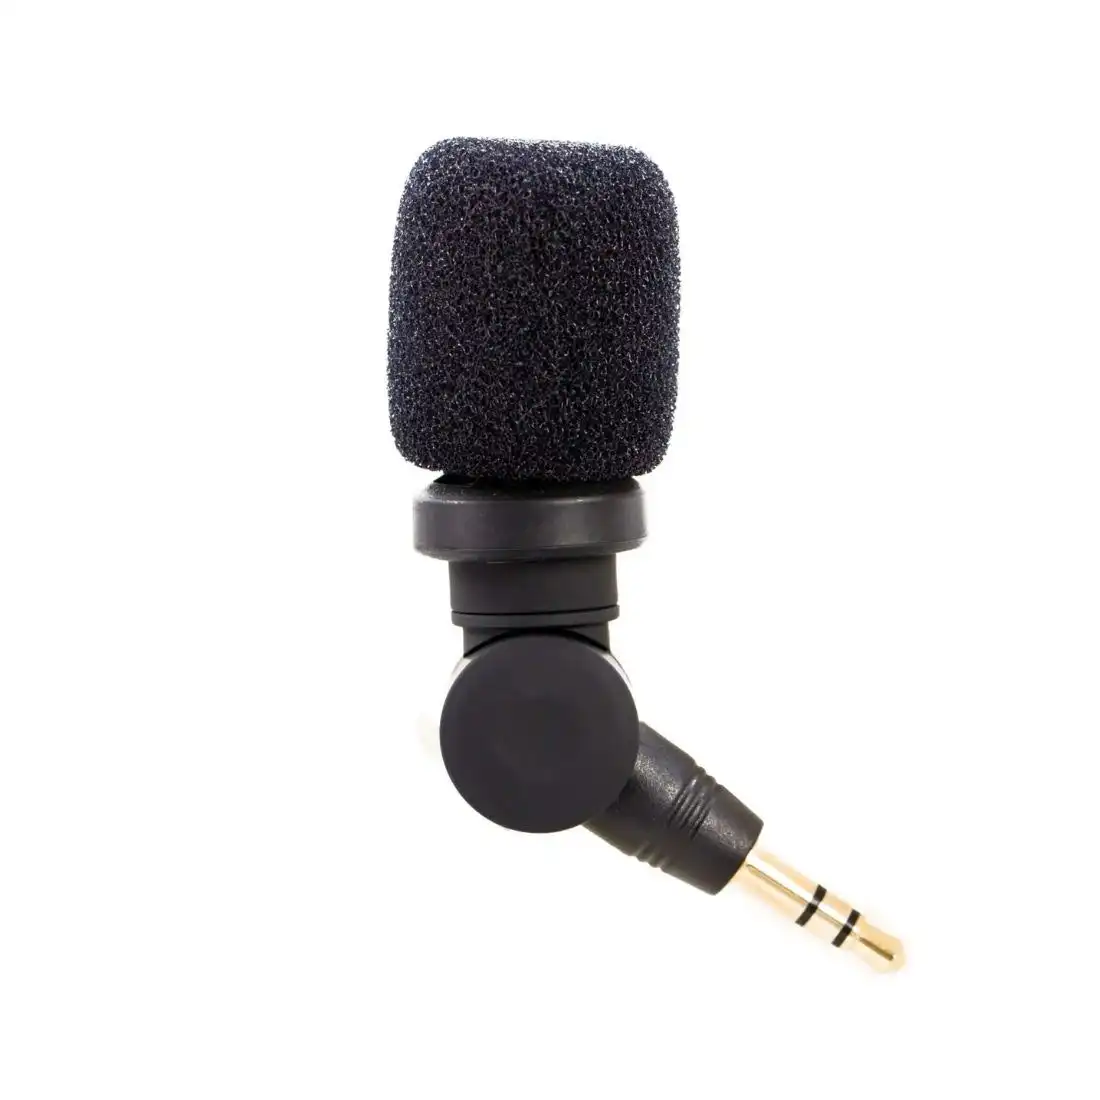 Saramonic SR-XM1 Compact Microphone